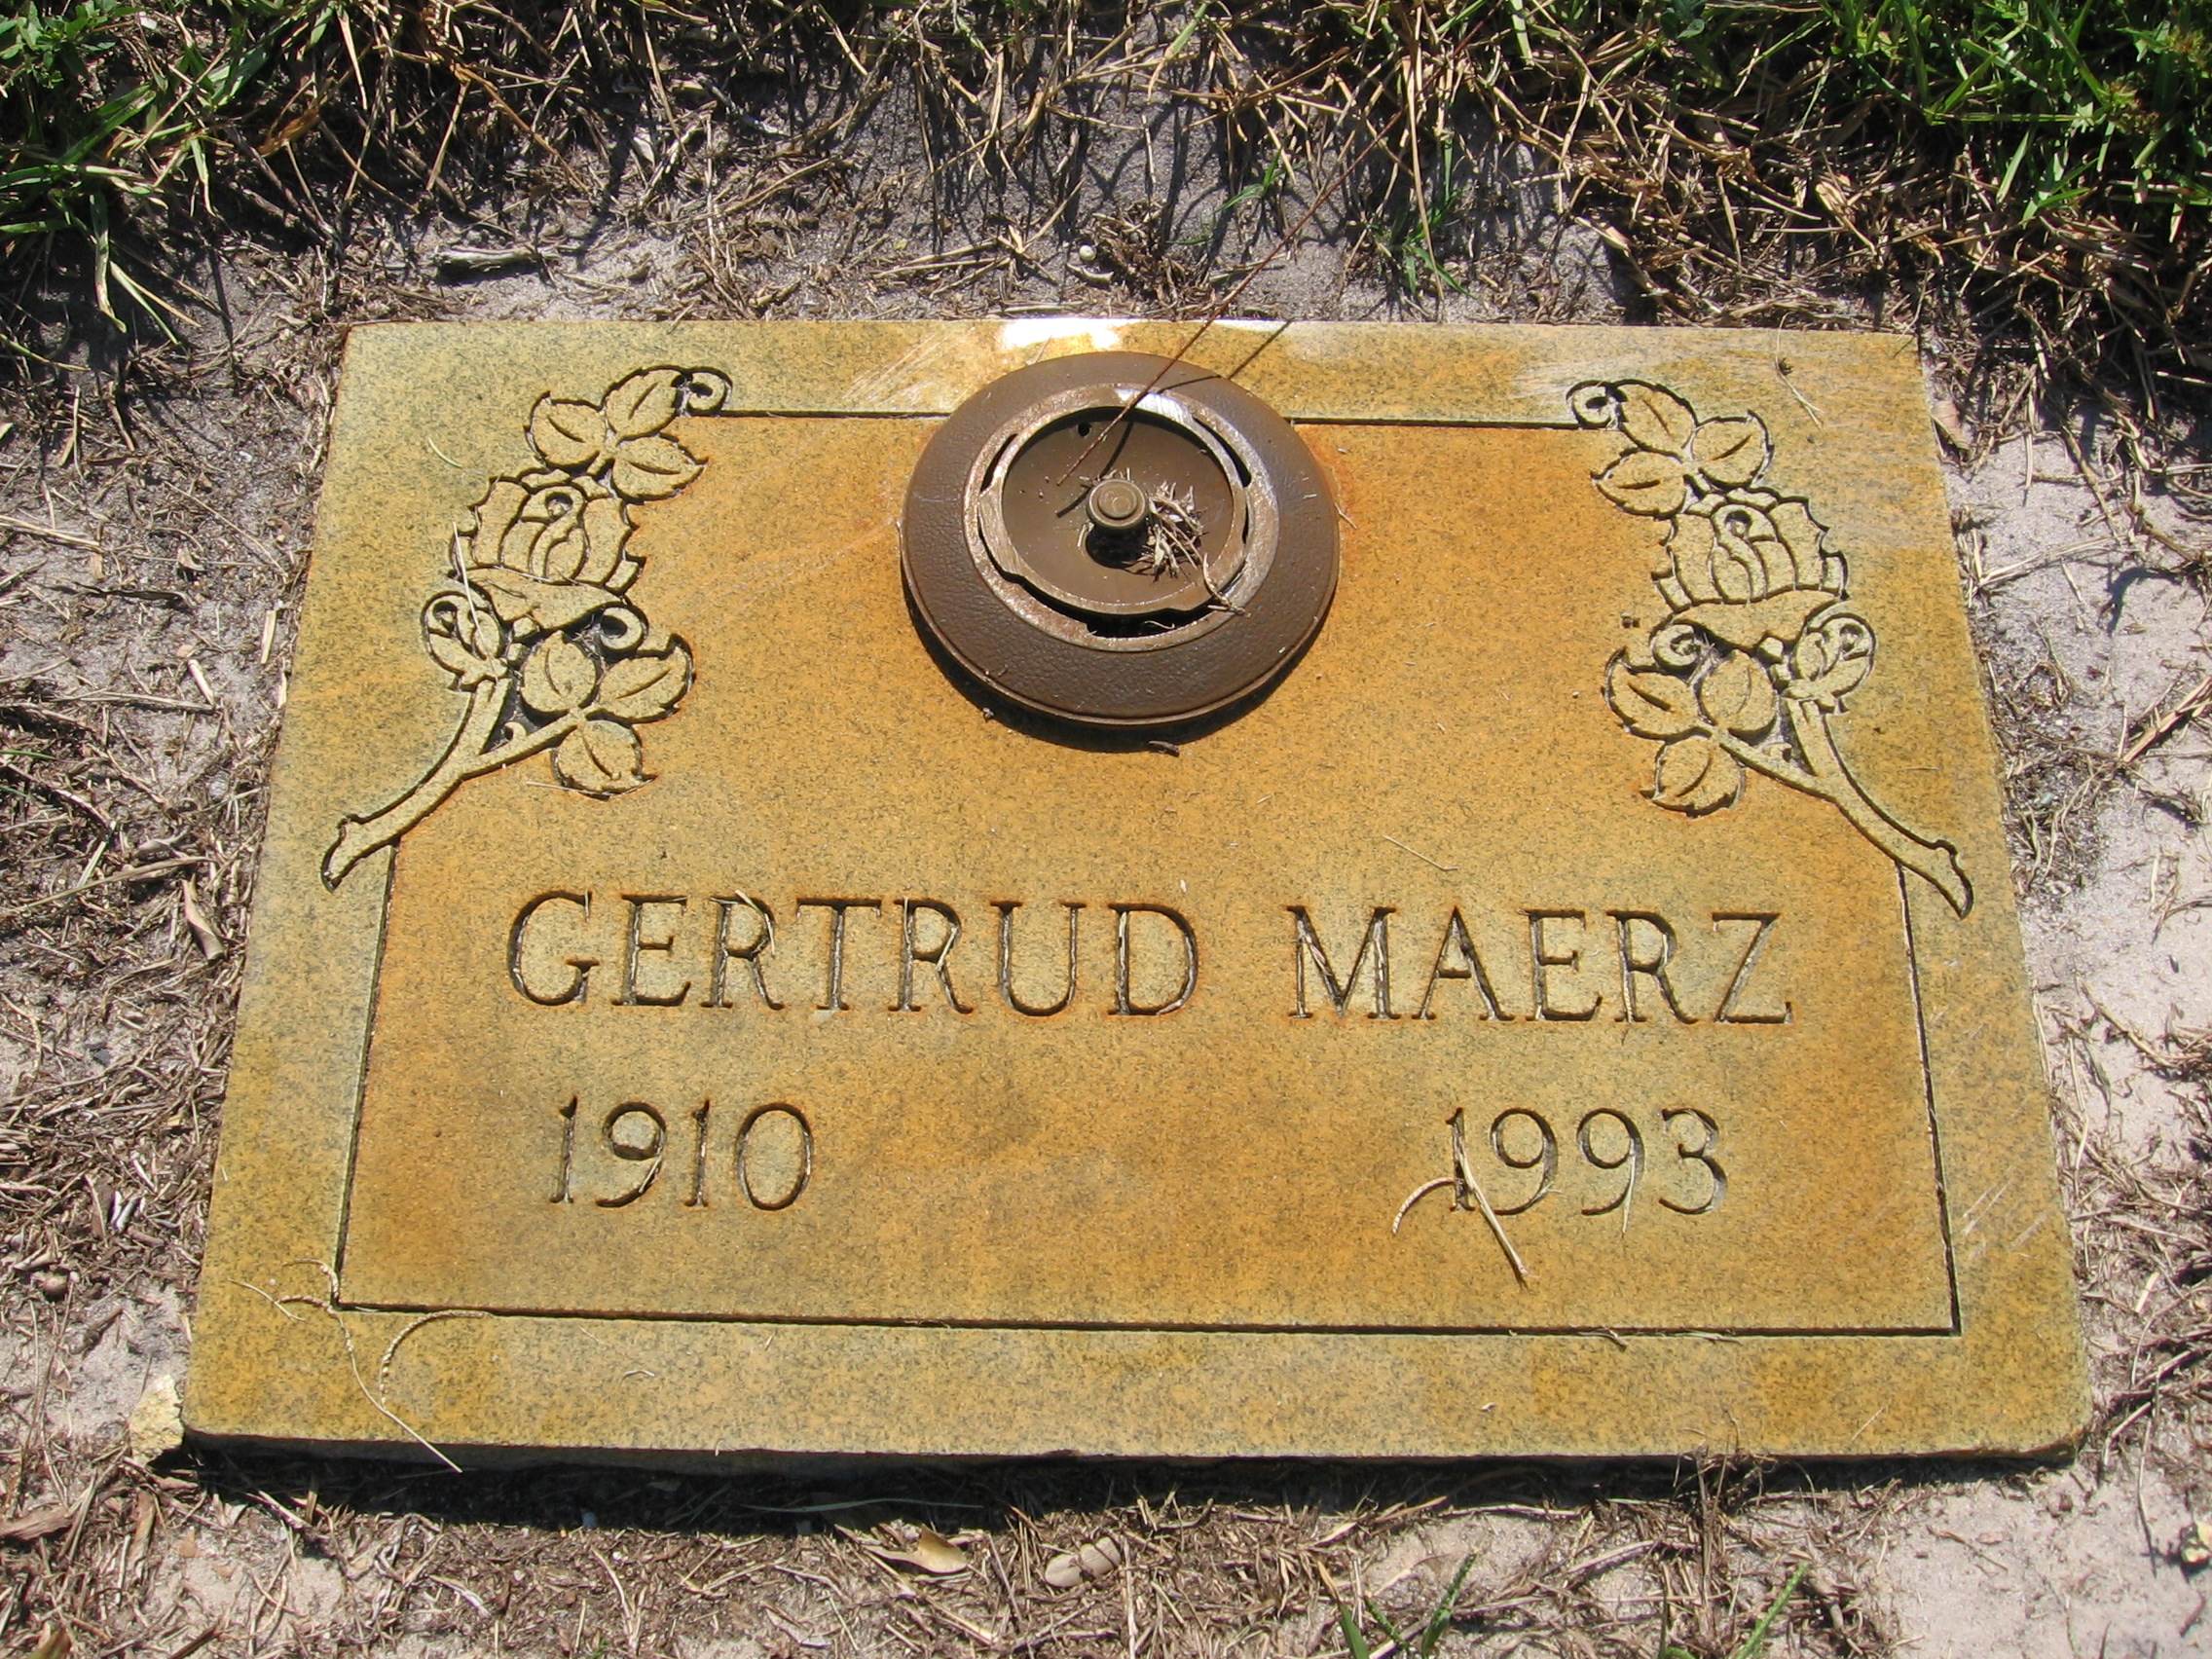 Gertrud Maerz